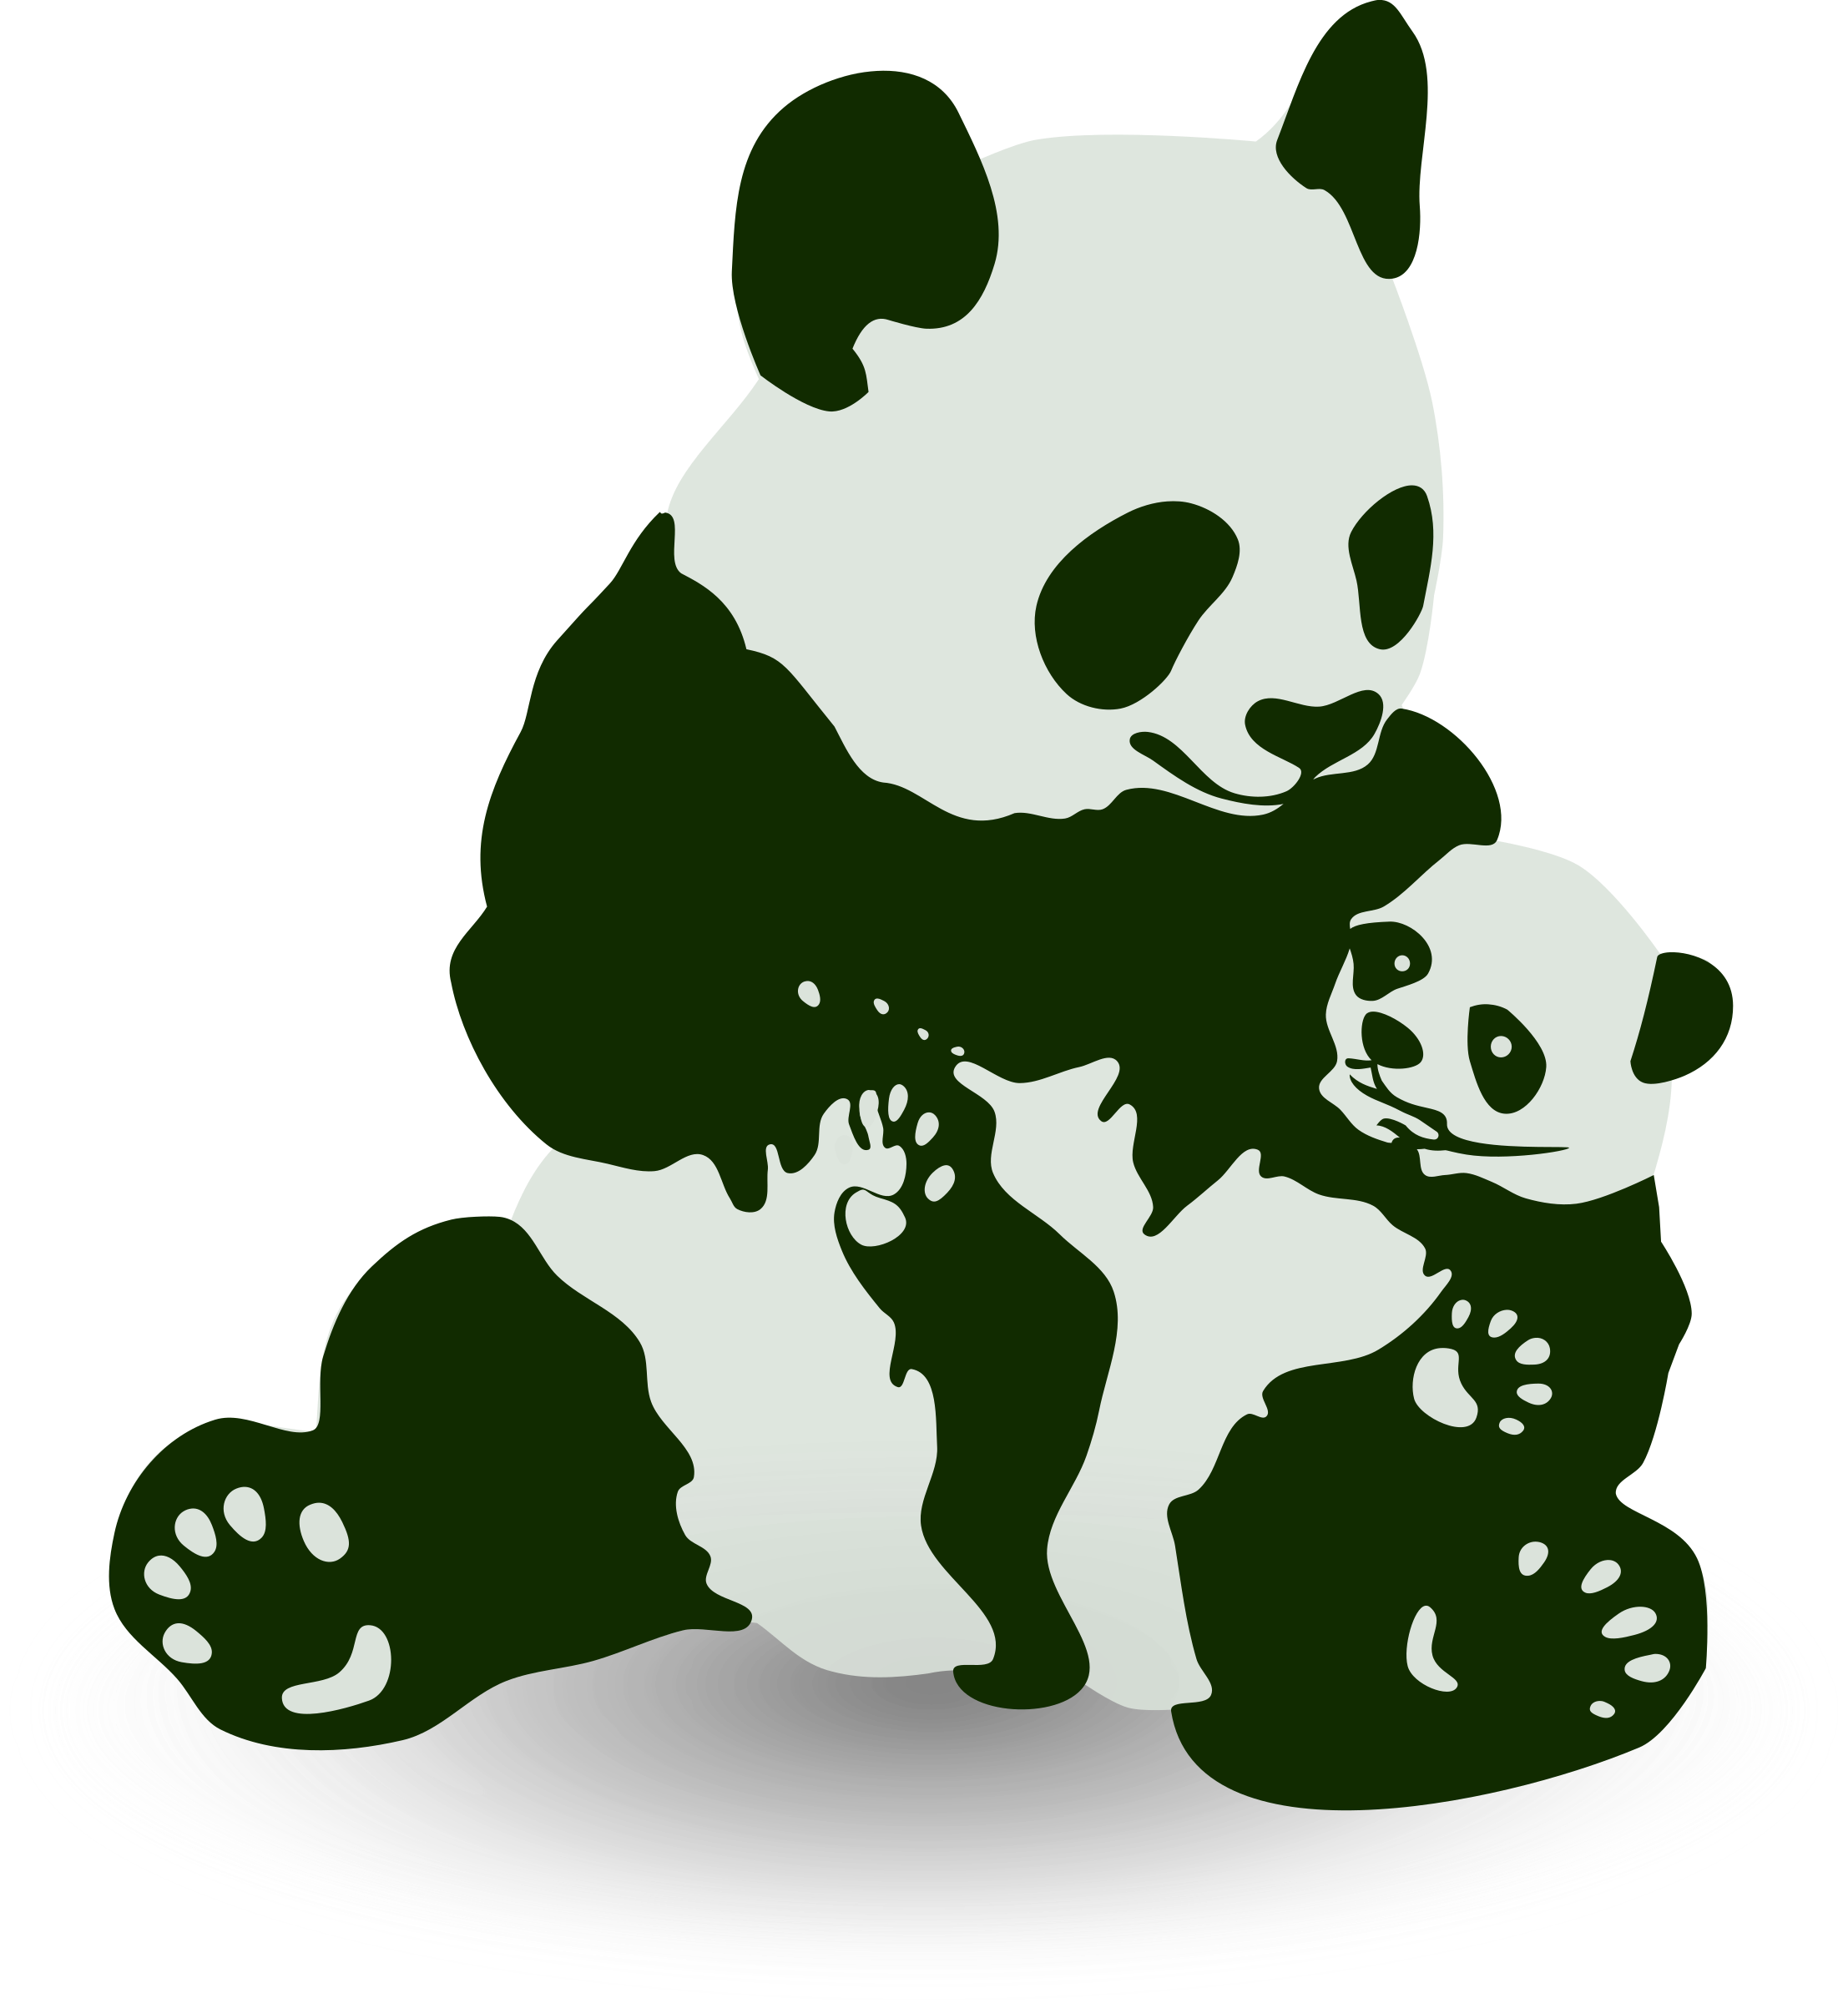 Free Baby Panda Cliparts, Download Free Baby Panda Cliparts png images